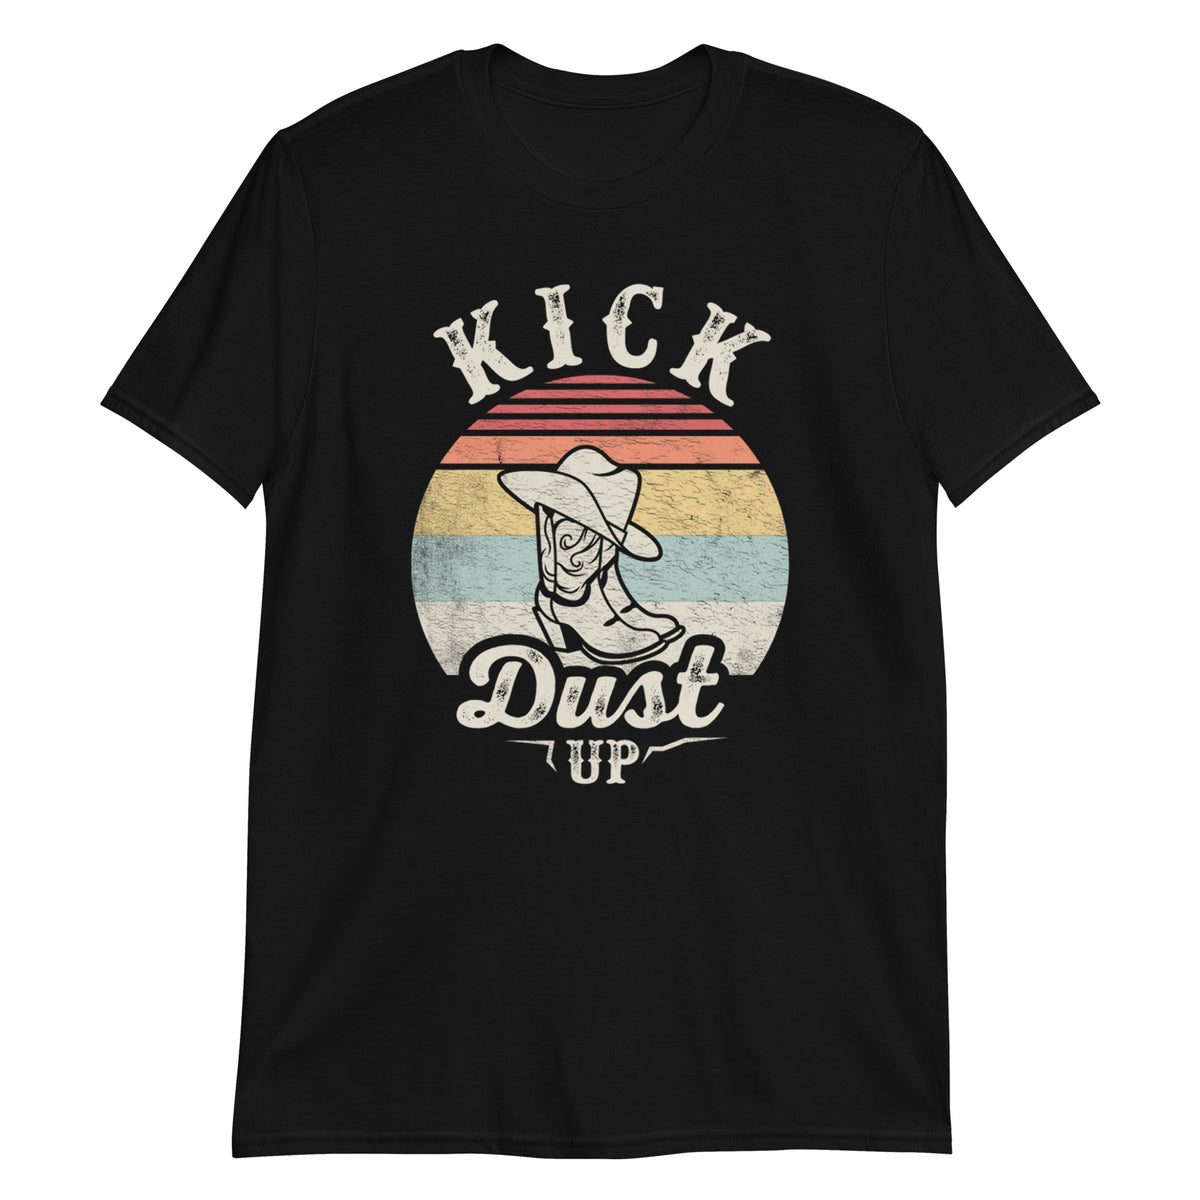 Kick Dust Up T-Shirt